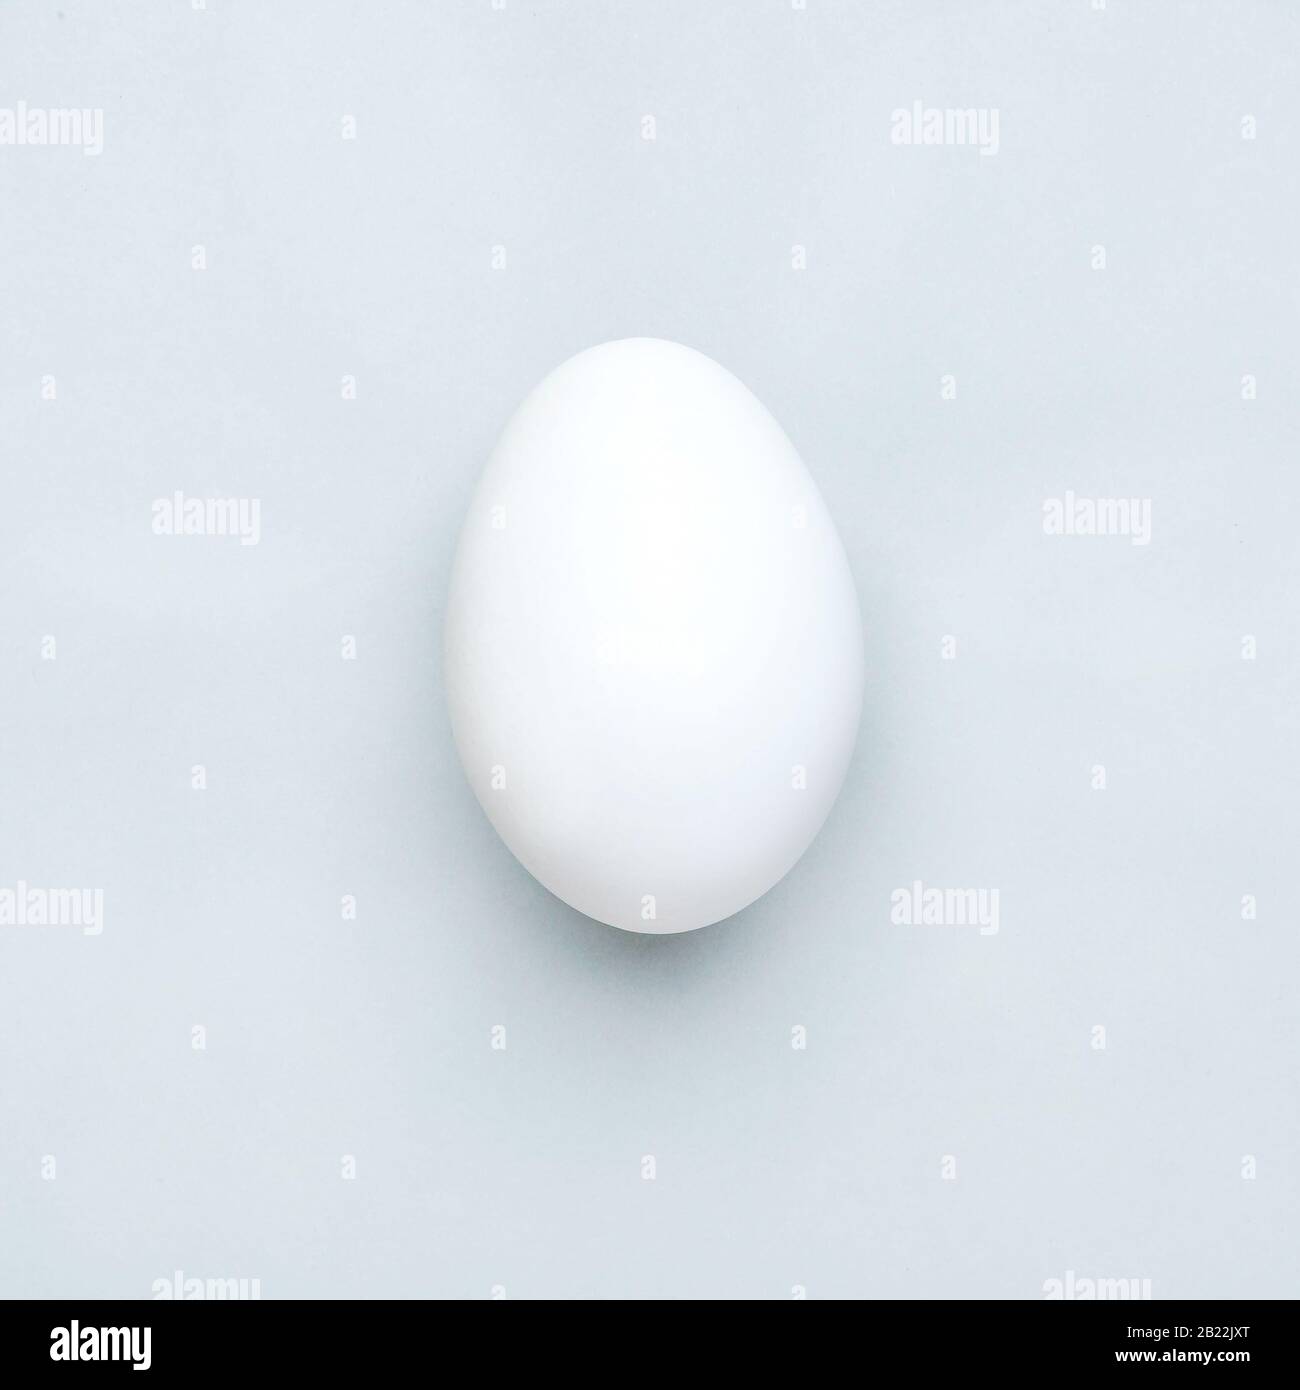 Minimal white easter egg on gray background, flat lay Stock Photo